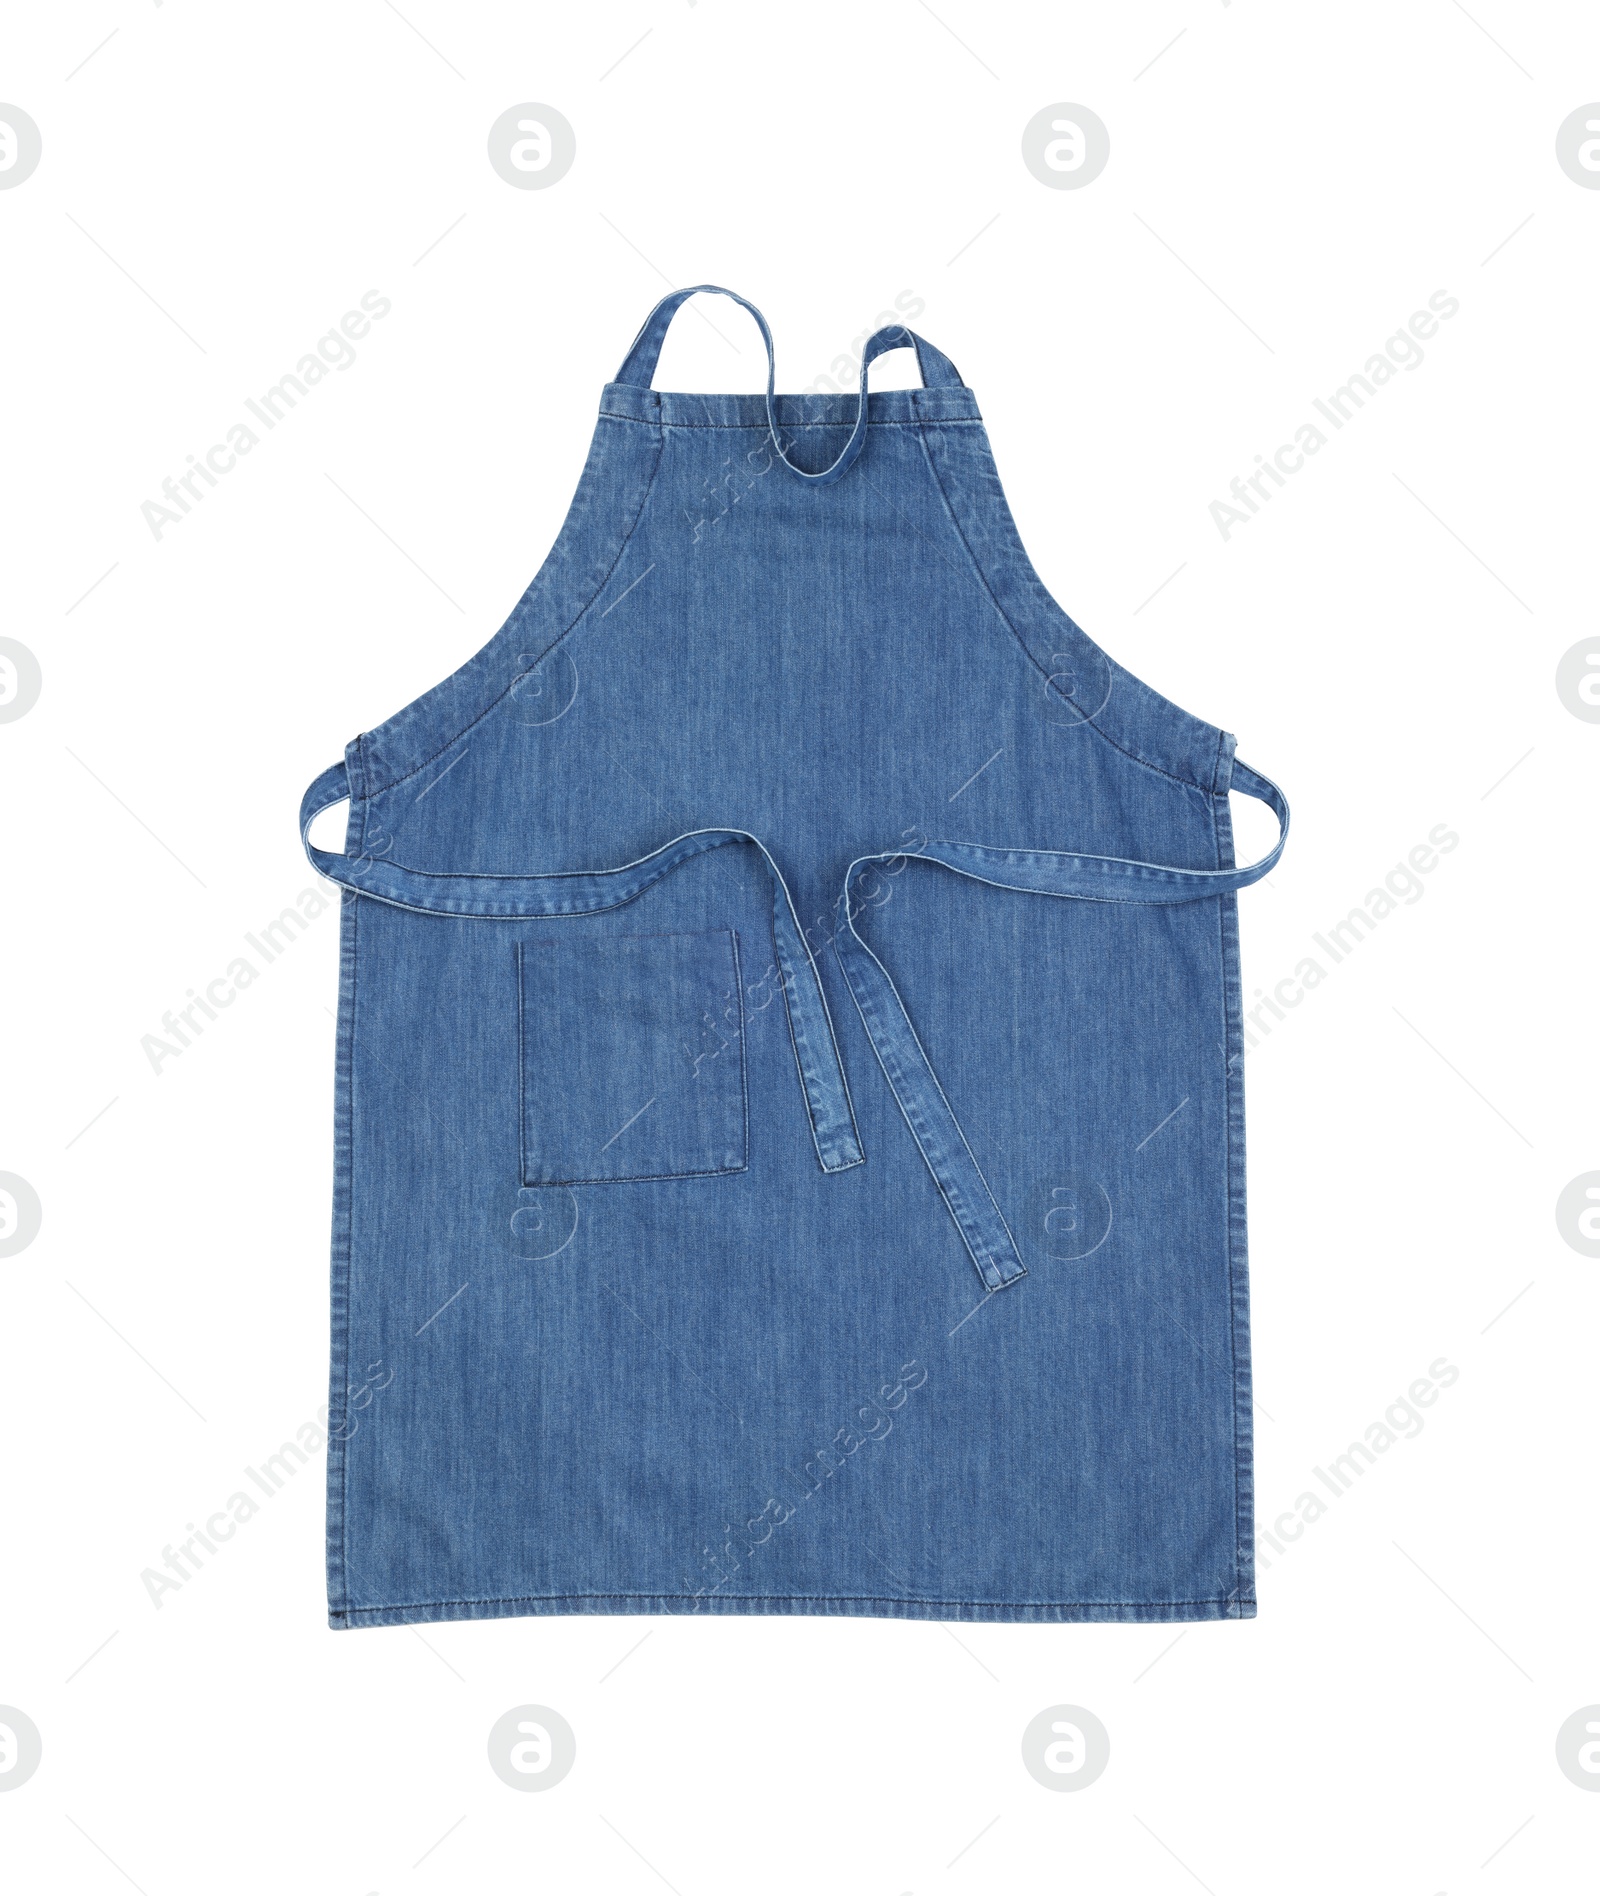 Photo of Denim blue kitchen apron isolated on white